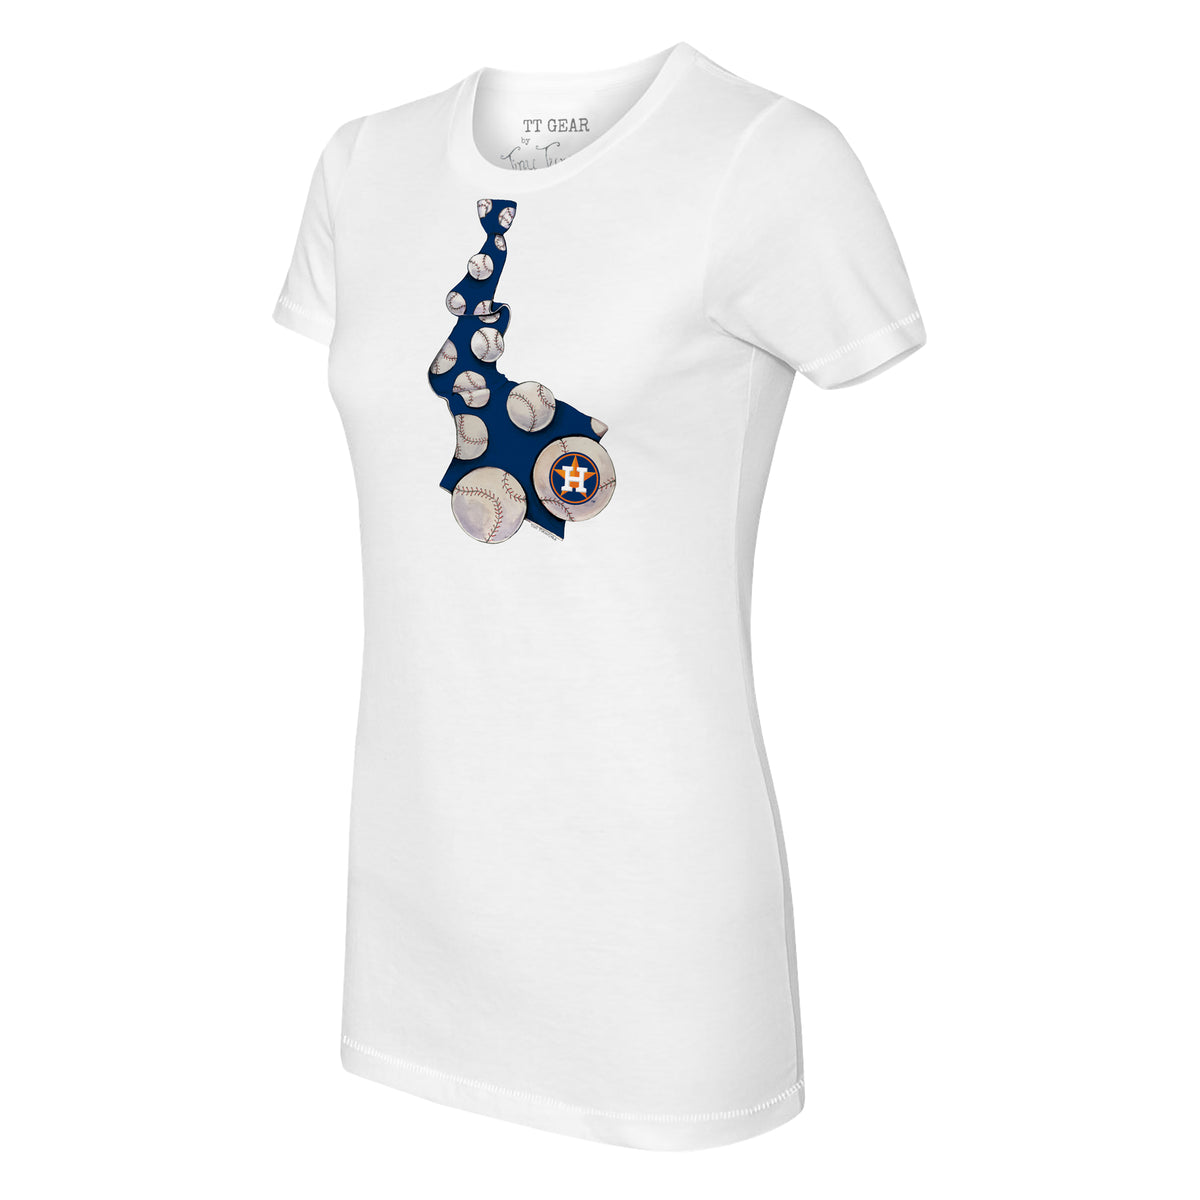 Women's Tiny Turnip White Houston Astros Heart Lolly T-Shirt Size: Medium